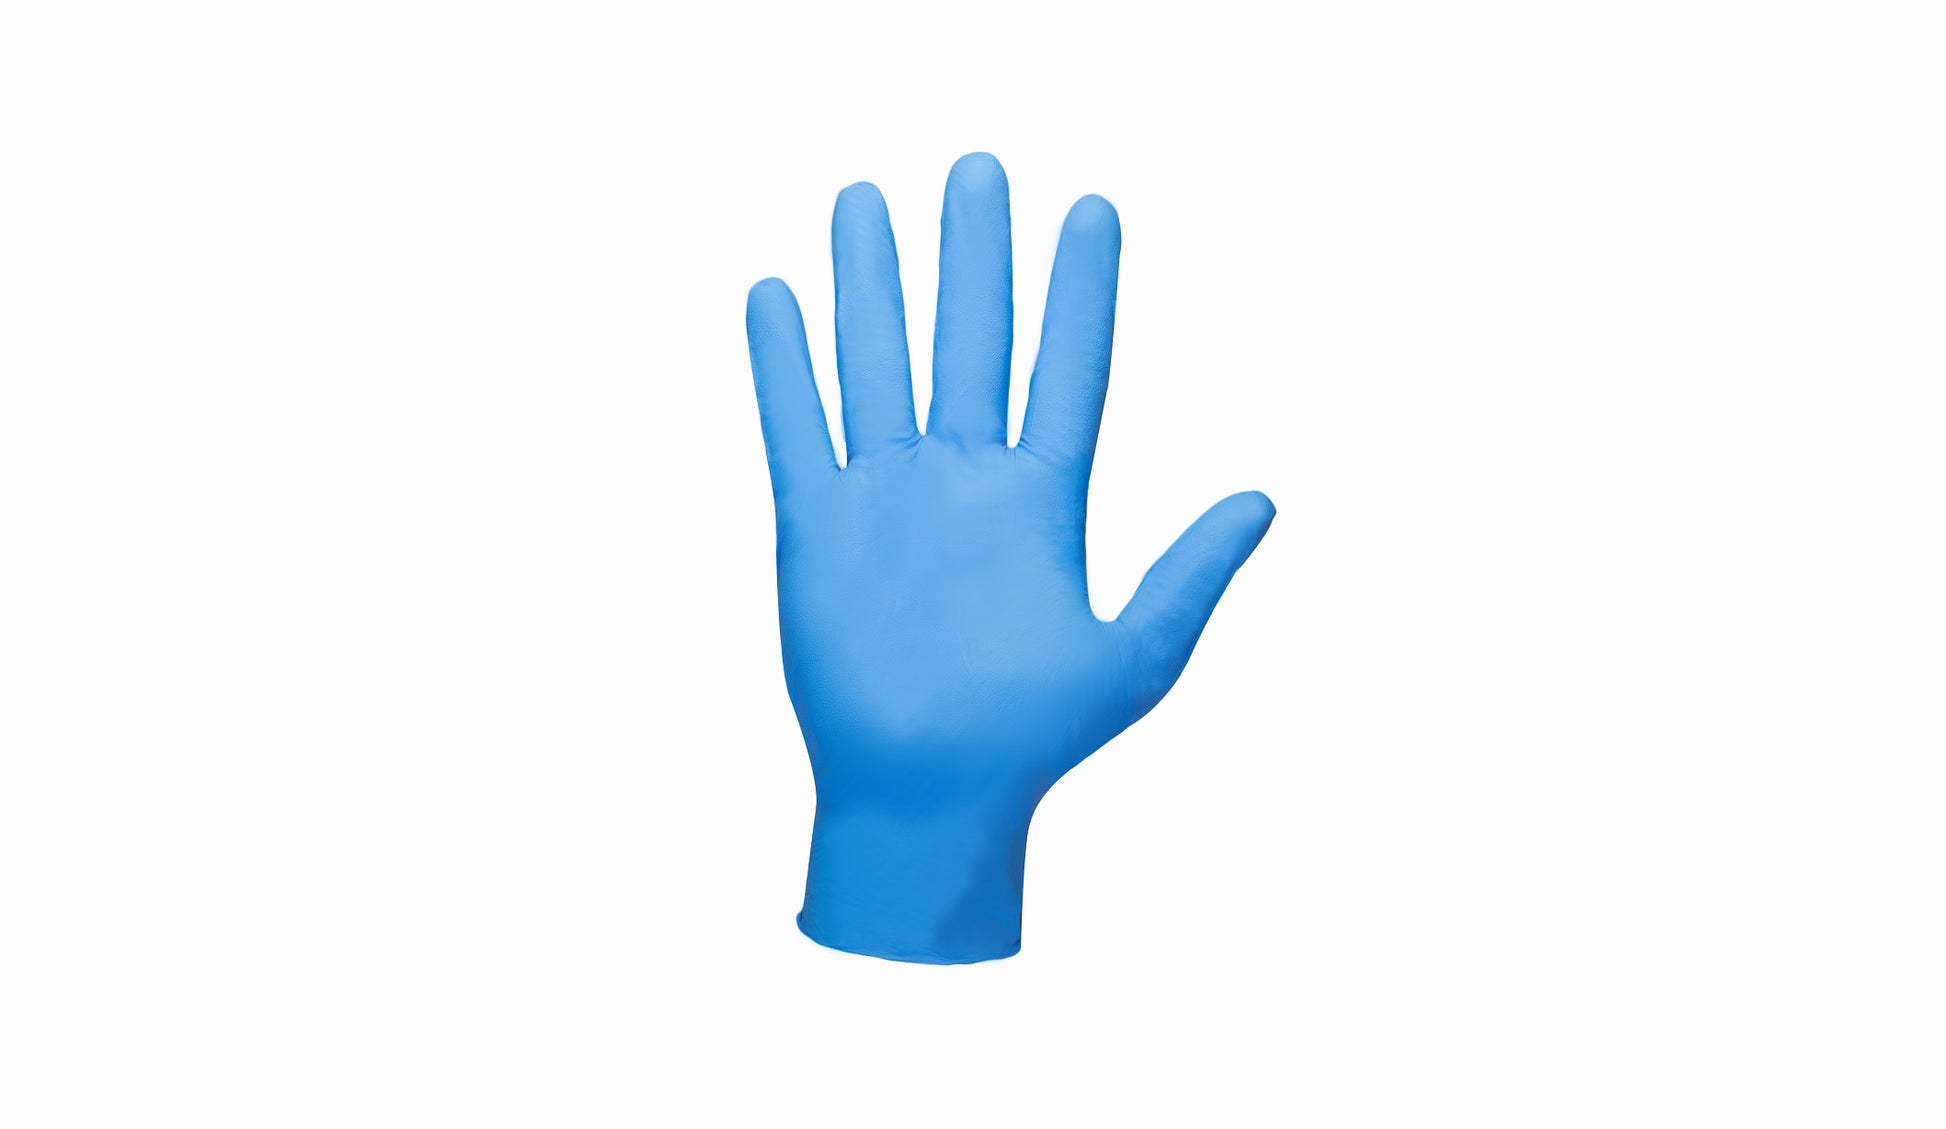 30350 Series – 3.5g Shamrock Blue Nitrile Exam Powder Free Gloves